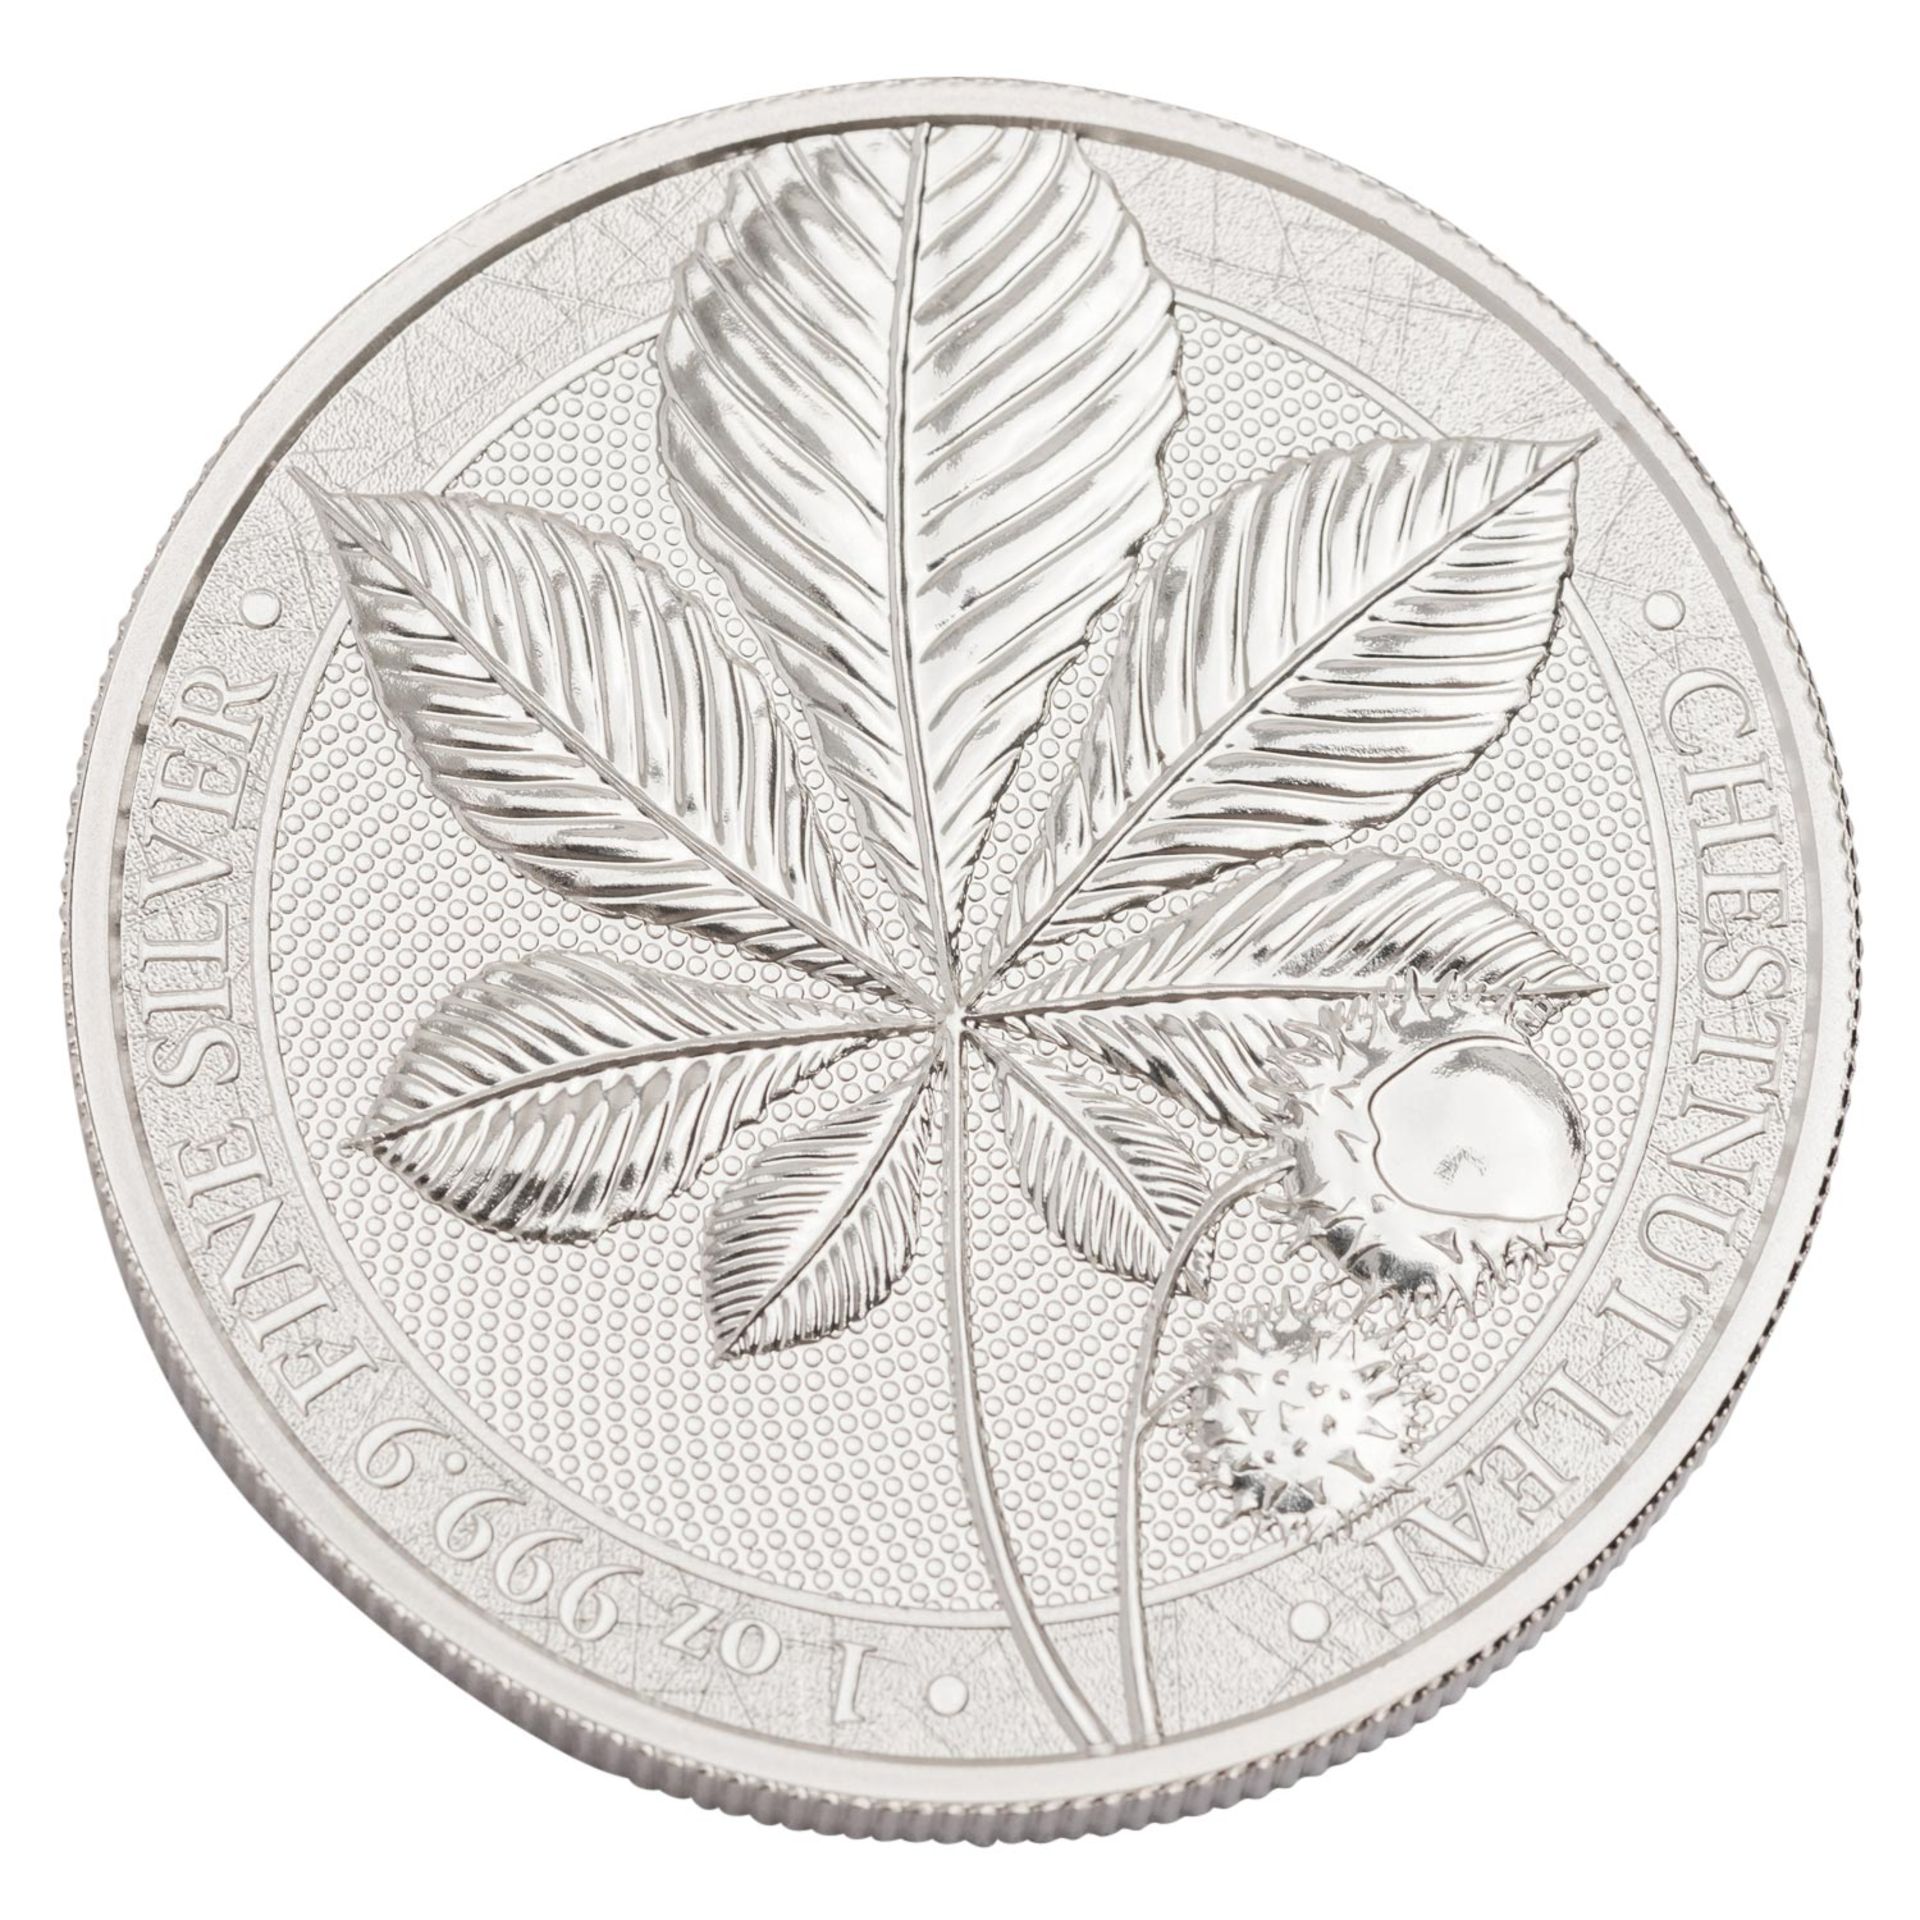 Germania Mint/SILBER - Gewichtiges Lot! 100 x 5 Mark 'Chestnut Leaf' 2021 zu je 1 Unze Feinsilber. - Image 2 of 3